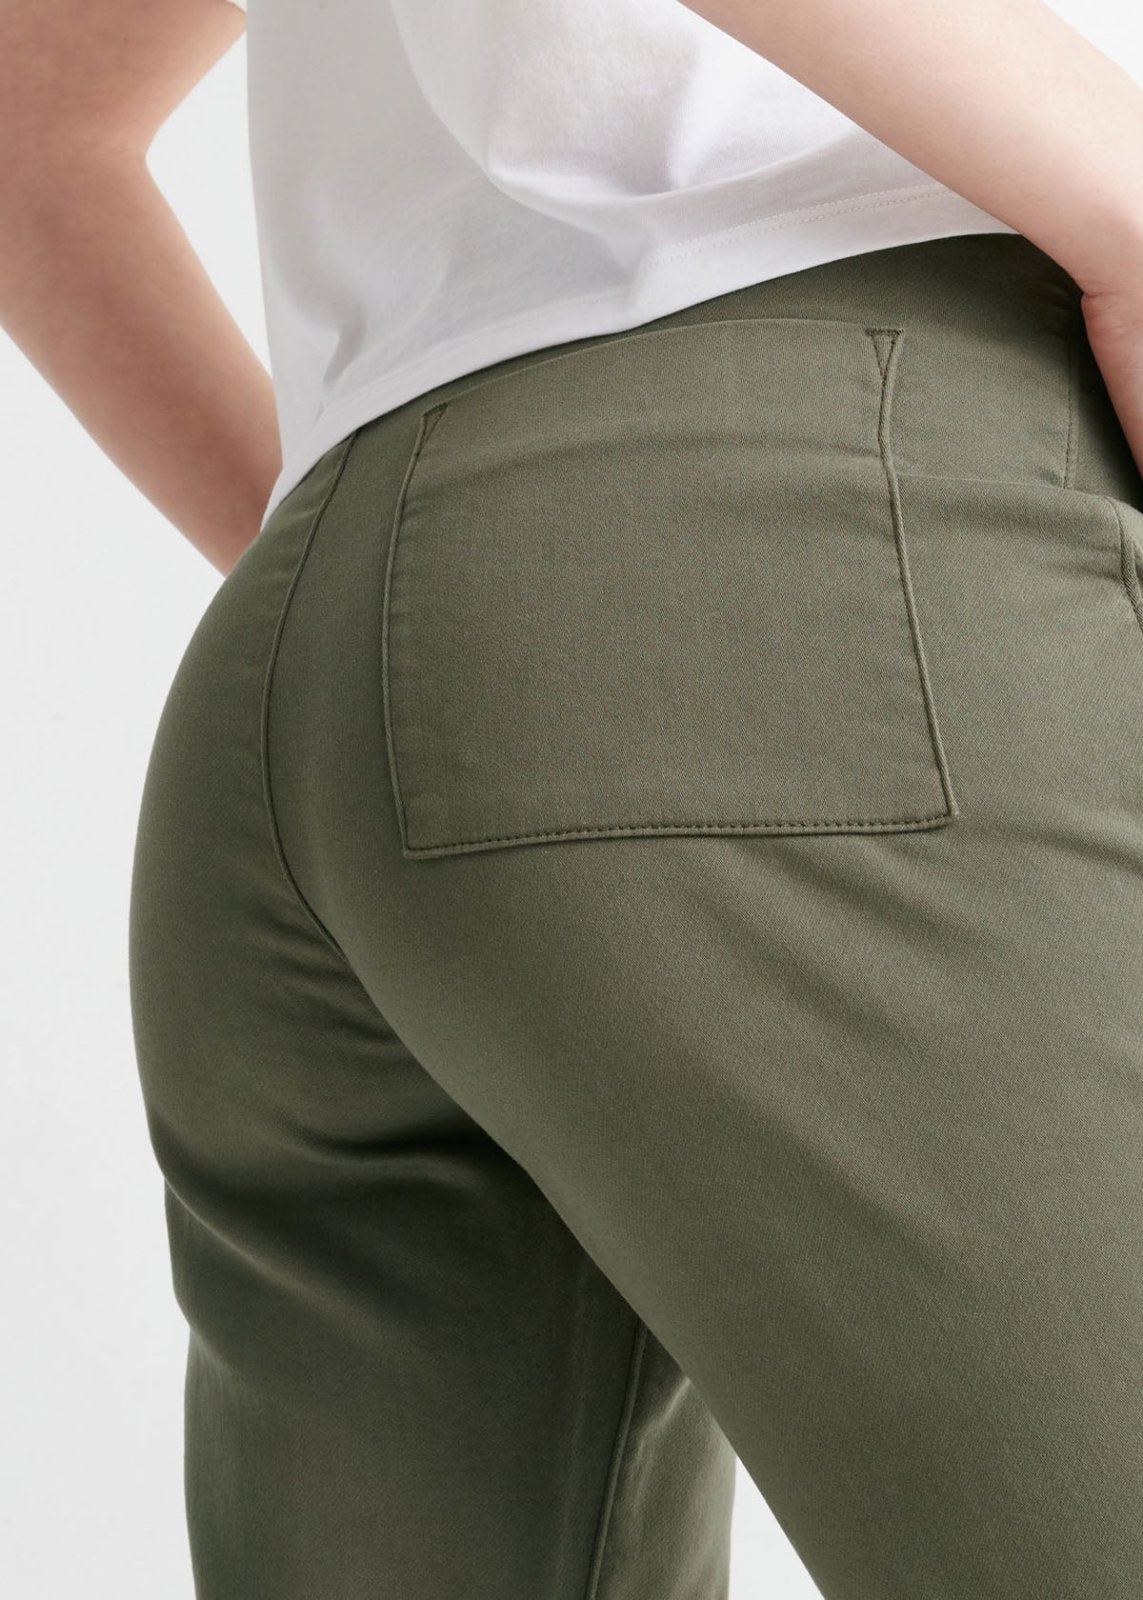 Women's Green Sweatpant Back Pocket